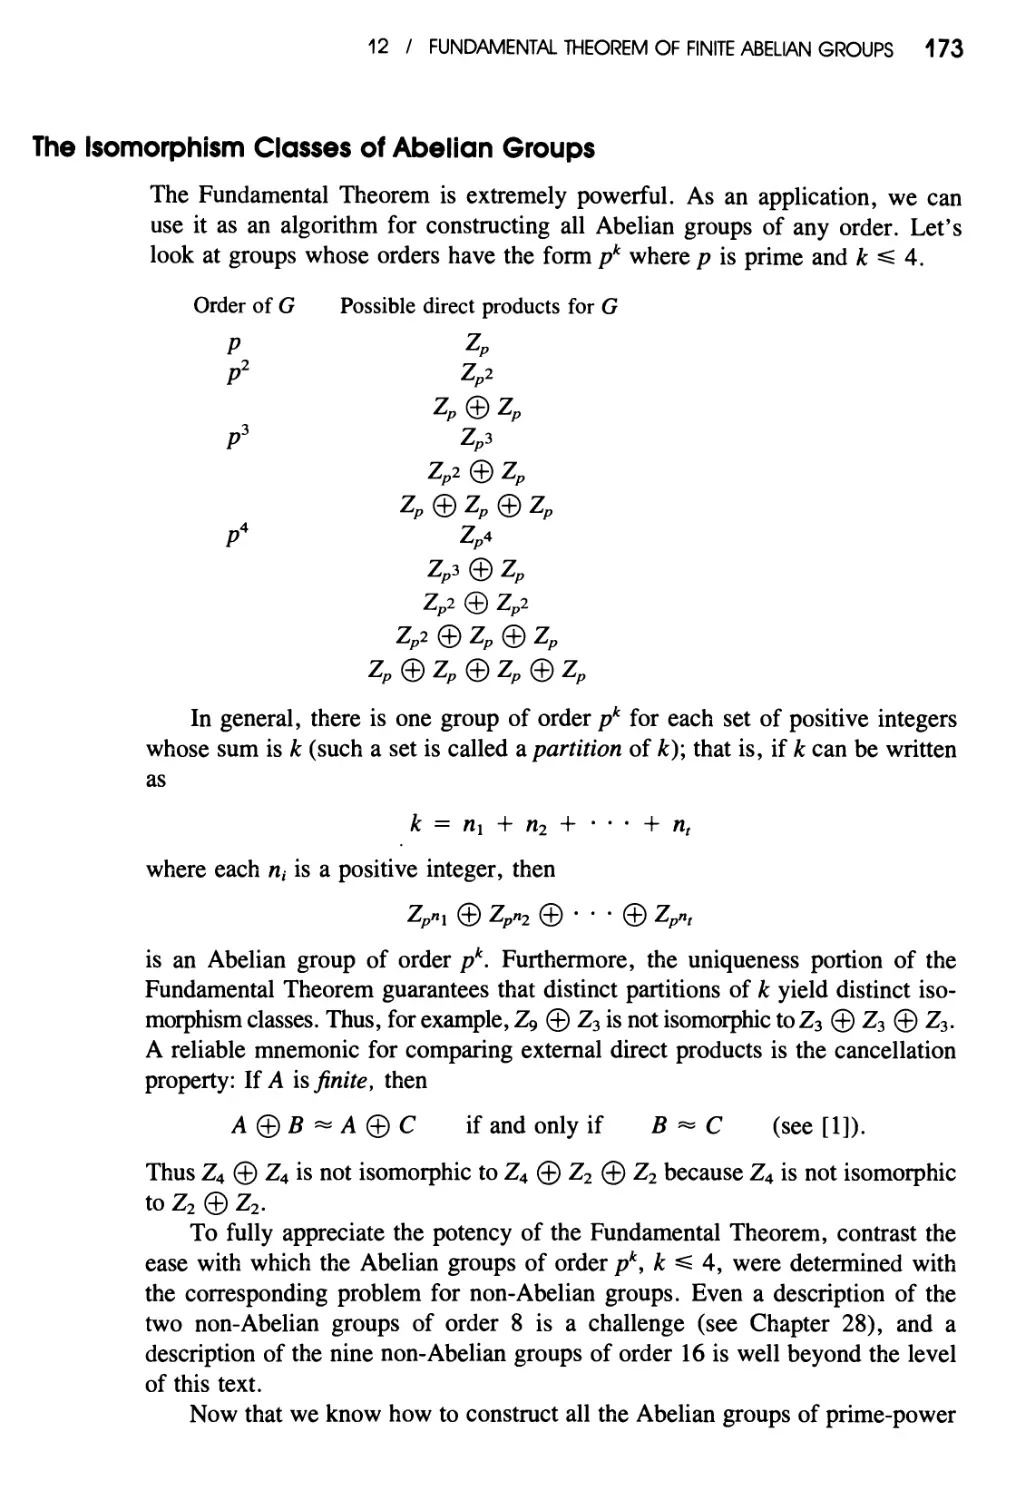 The Isomorphism Classes of Abelian Groups